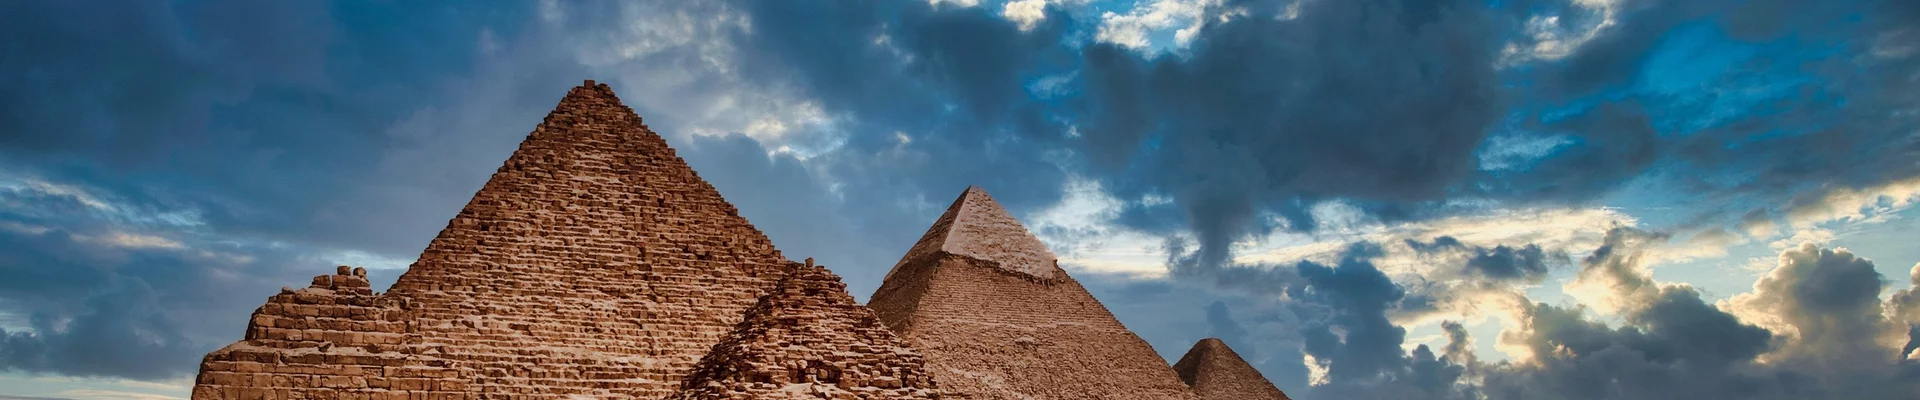 Landscape photo of the Pyramids of Giza